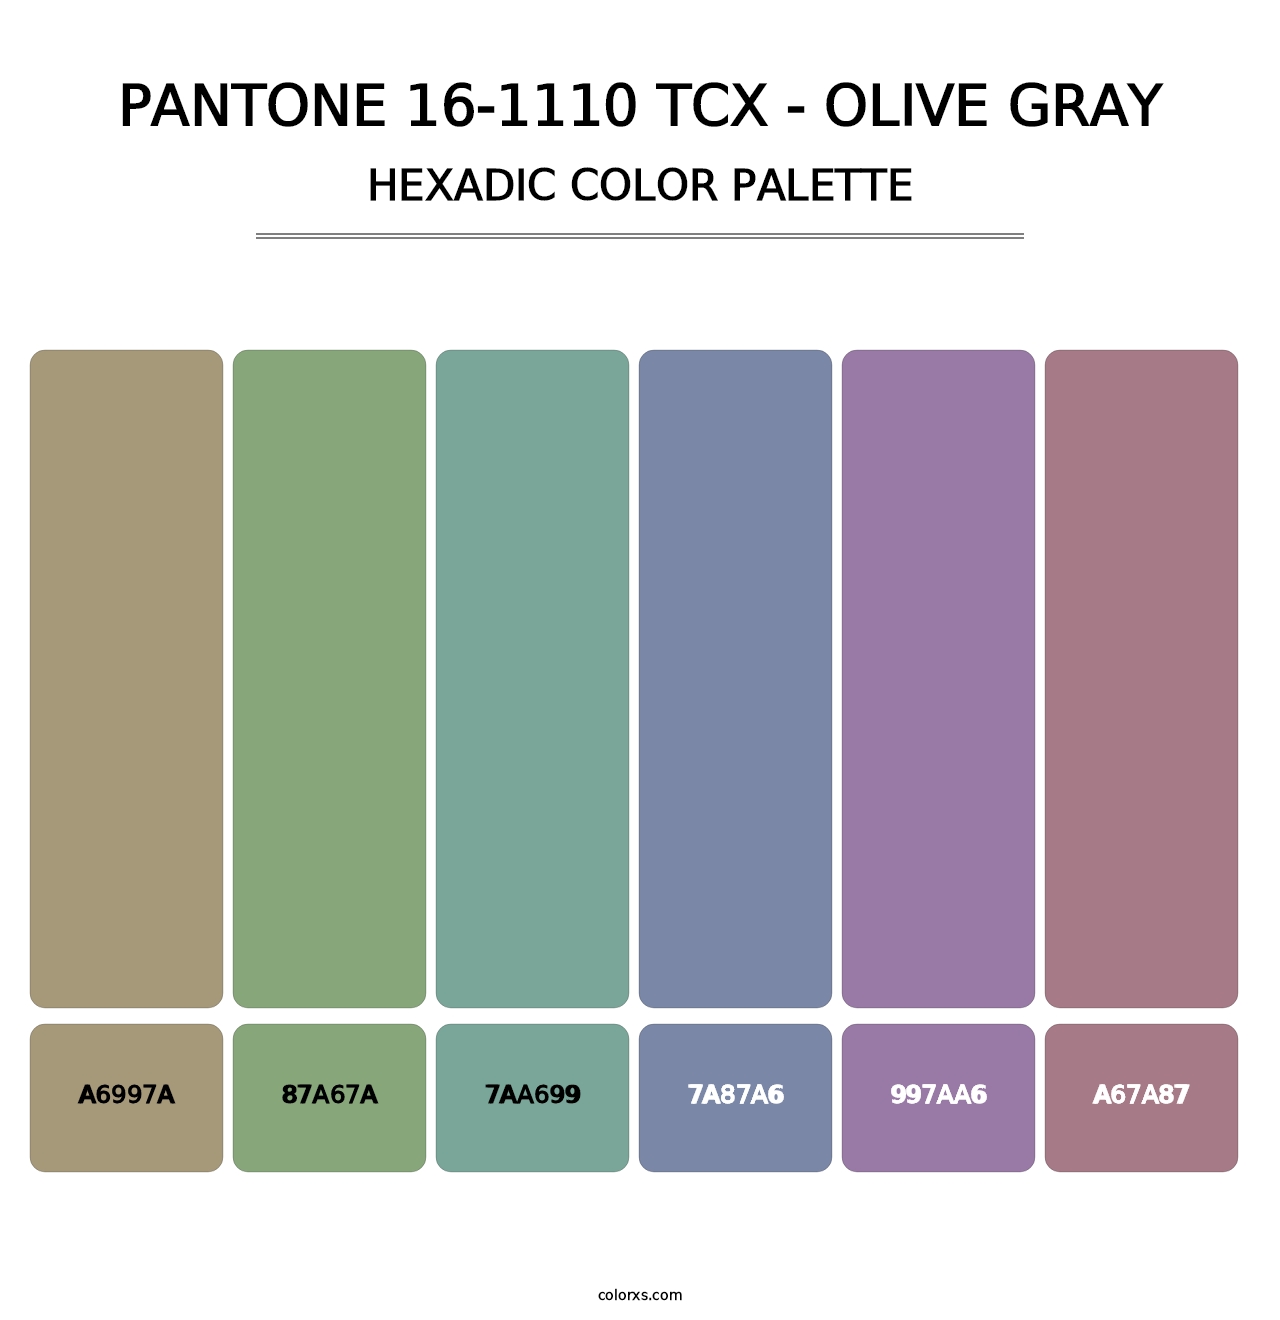 PANTONE 16-1110 TCX - Olive Gray - Hexadic Color Palette